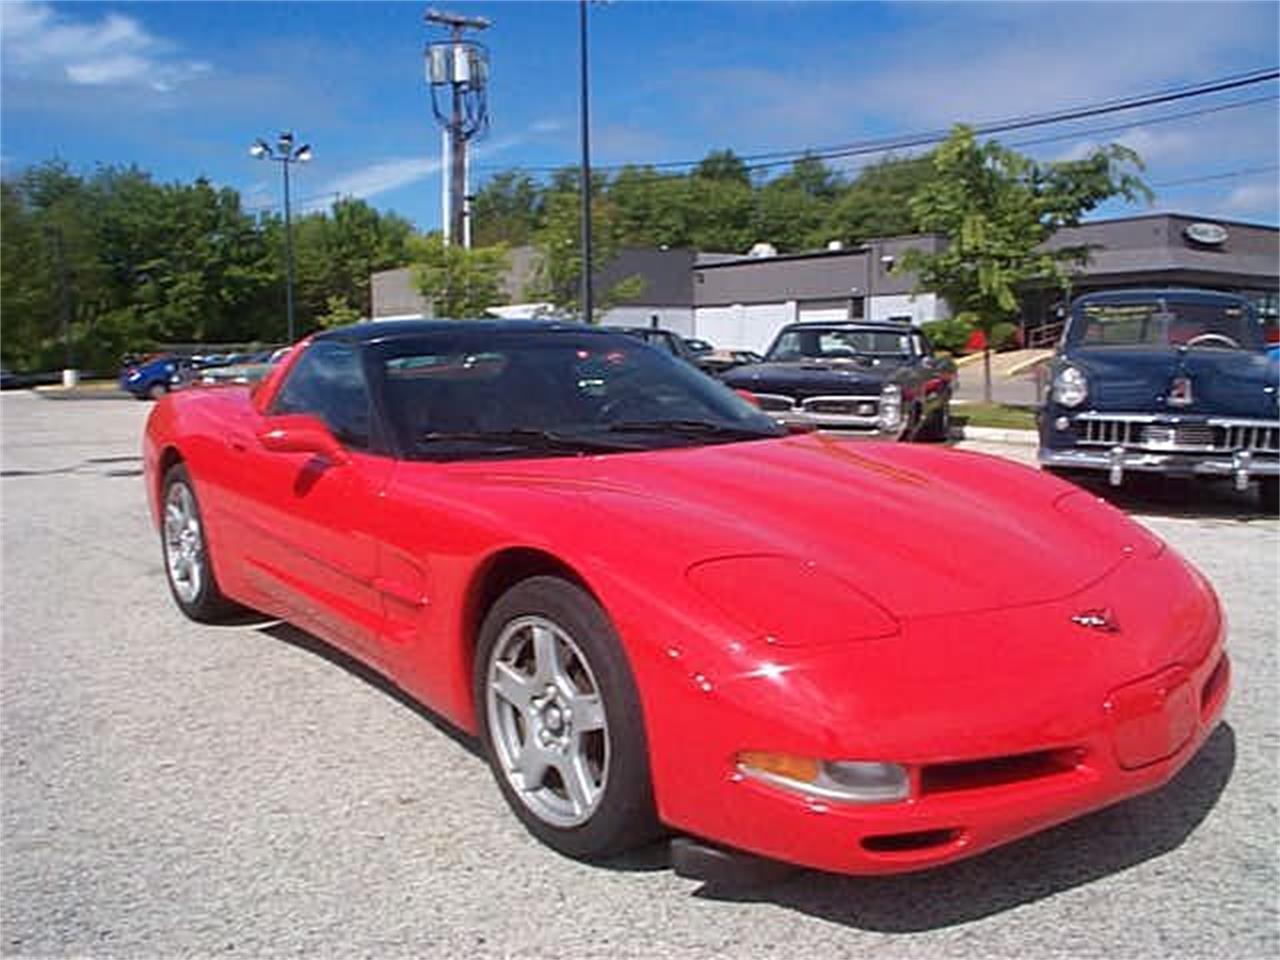 1997 Chevrolet Corvette For Sale Cc 1135769